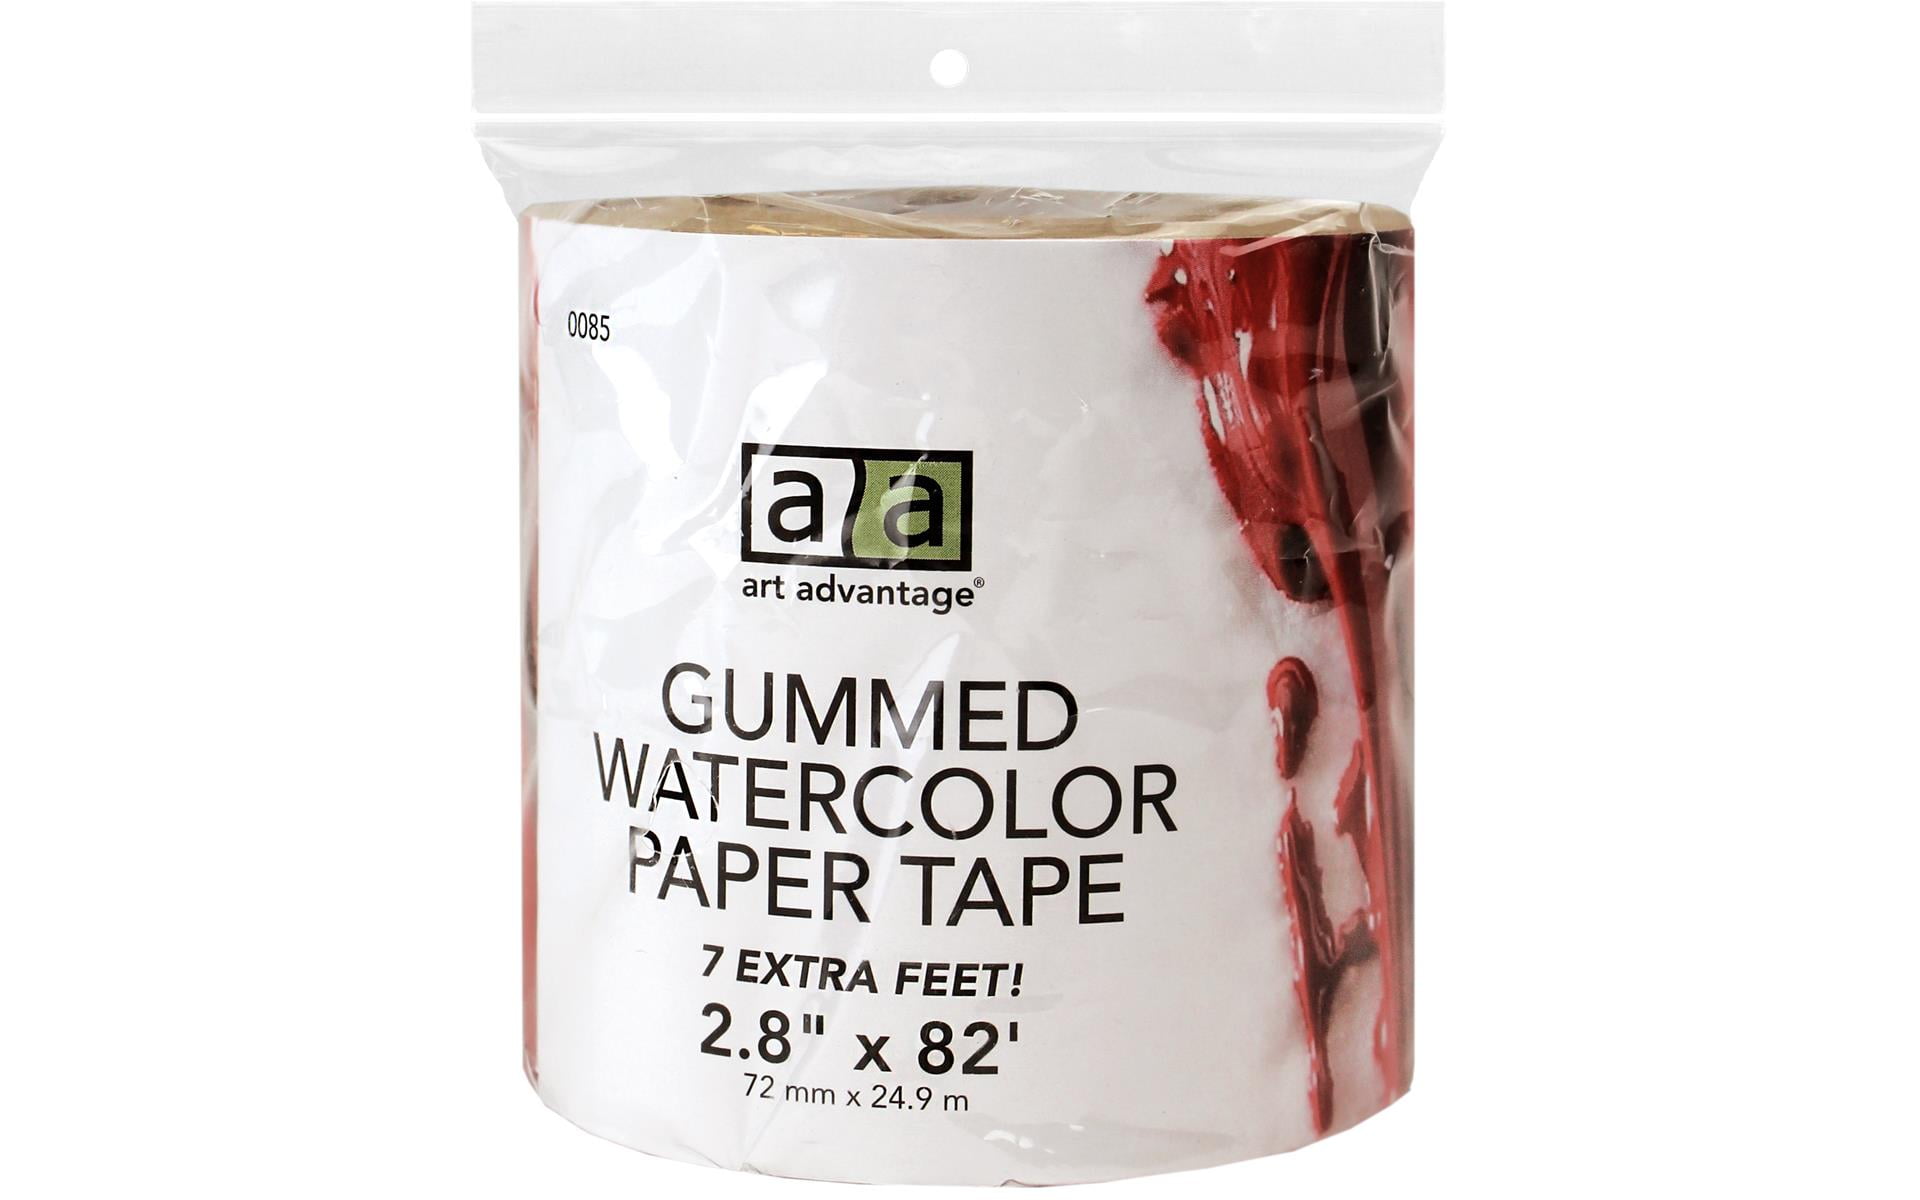 Art Advantage Gummed Watercolor Paper Tape - 2.8-inch x 82-foot